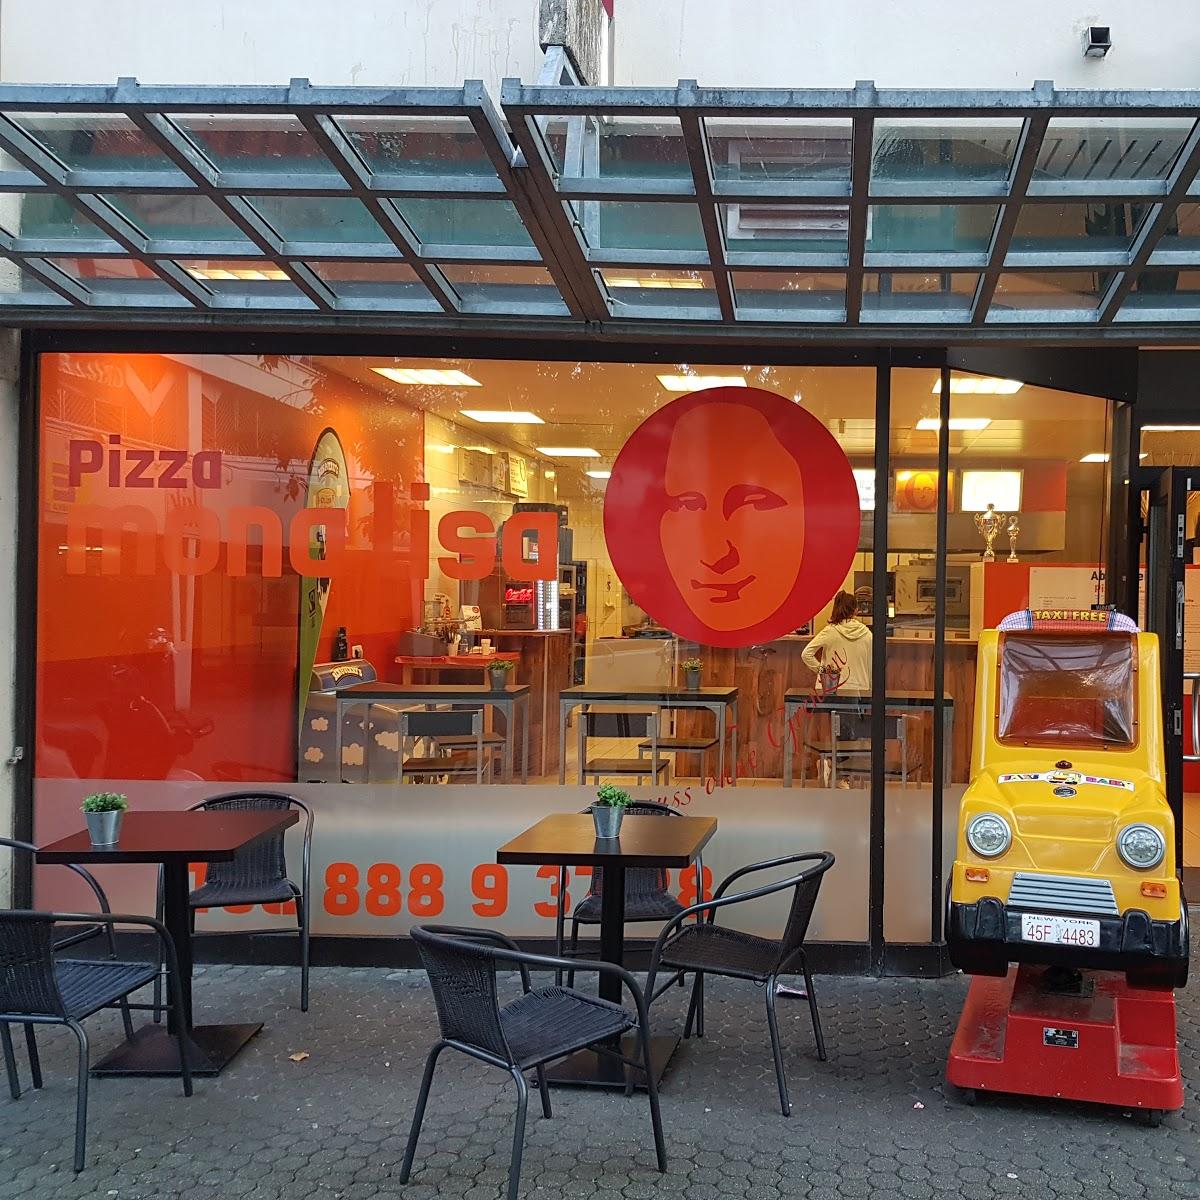 Restaurant "Pizza Mona Lisa Süd" in Freiburg im Breisgau